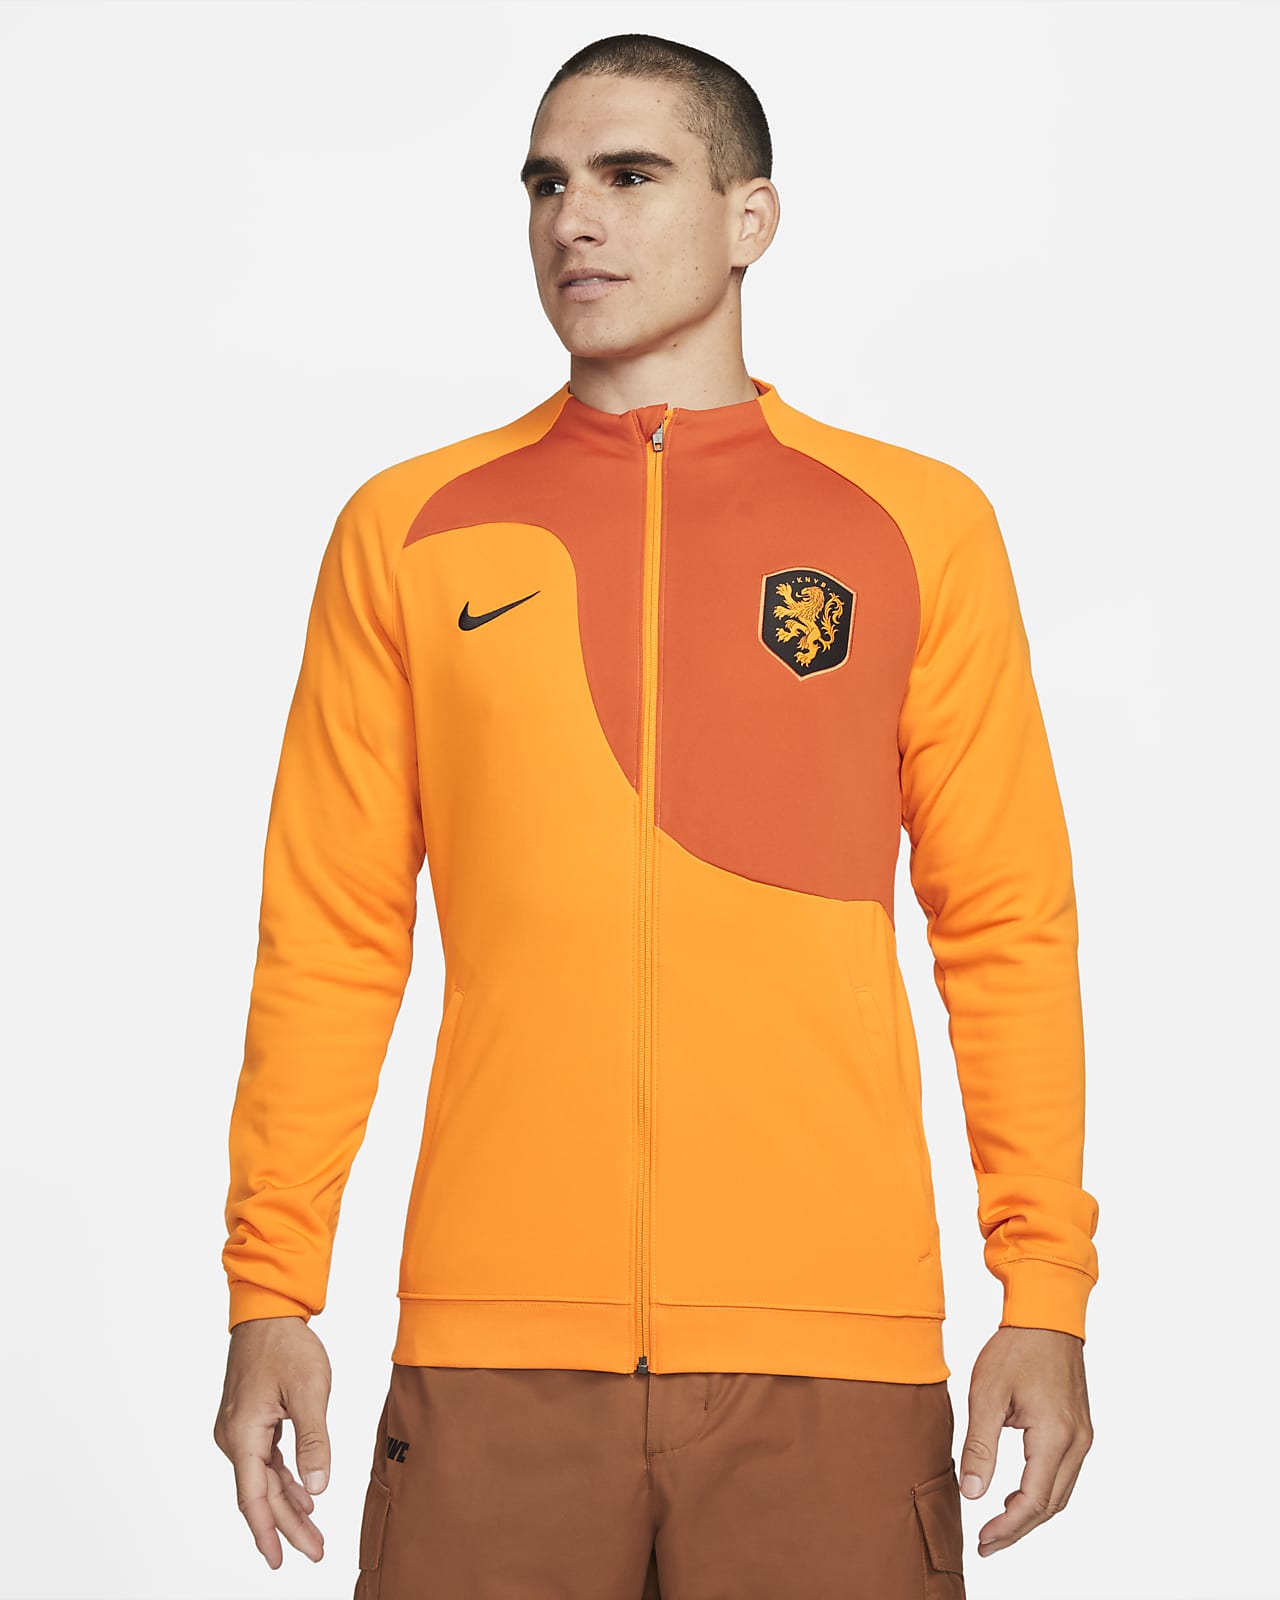 teller Reinig de vloer oogst Nederland Academy Pro Knit voetbaljack voor heren. Nike NL